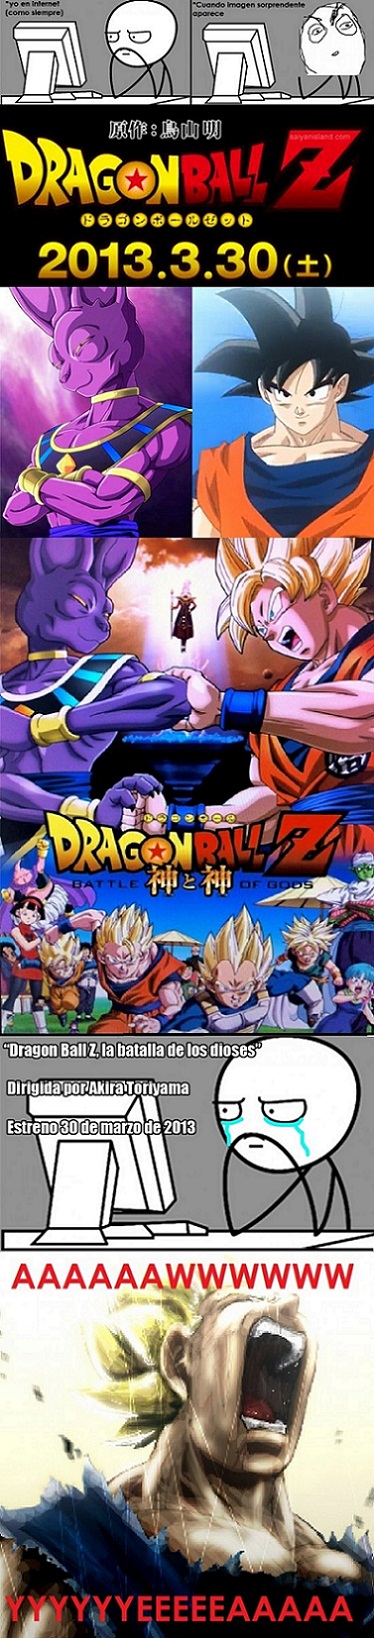 Ya se sabe mas sobre la batalla de Goku :') - meme